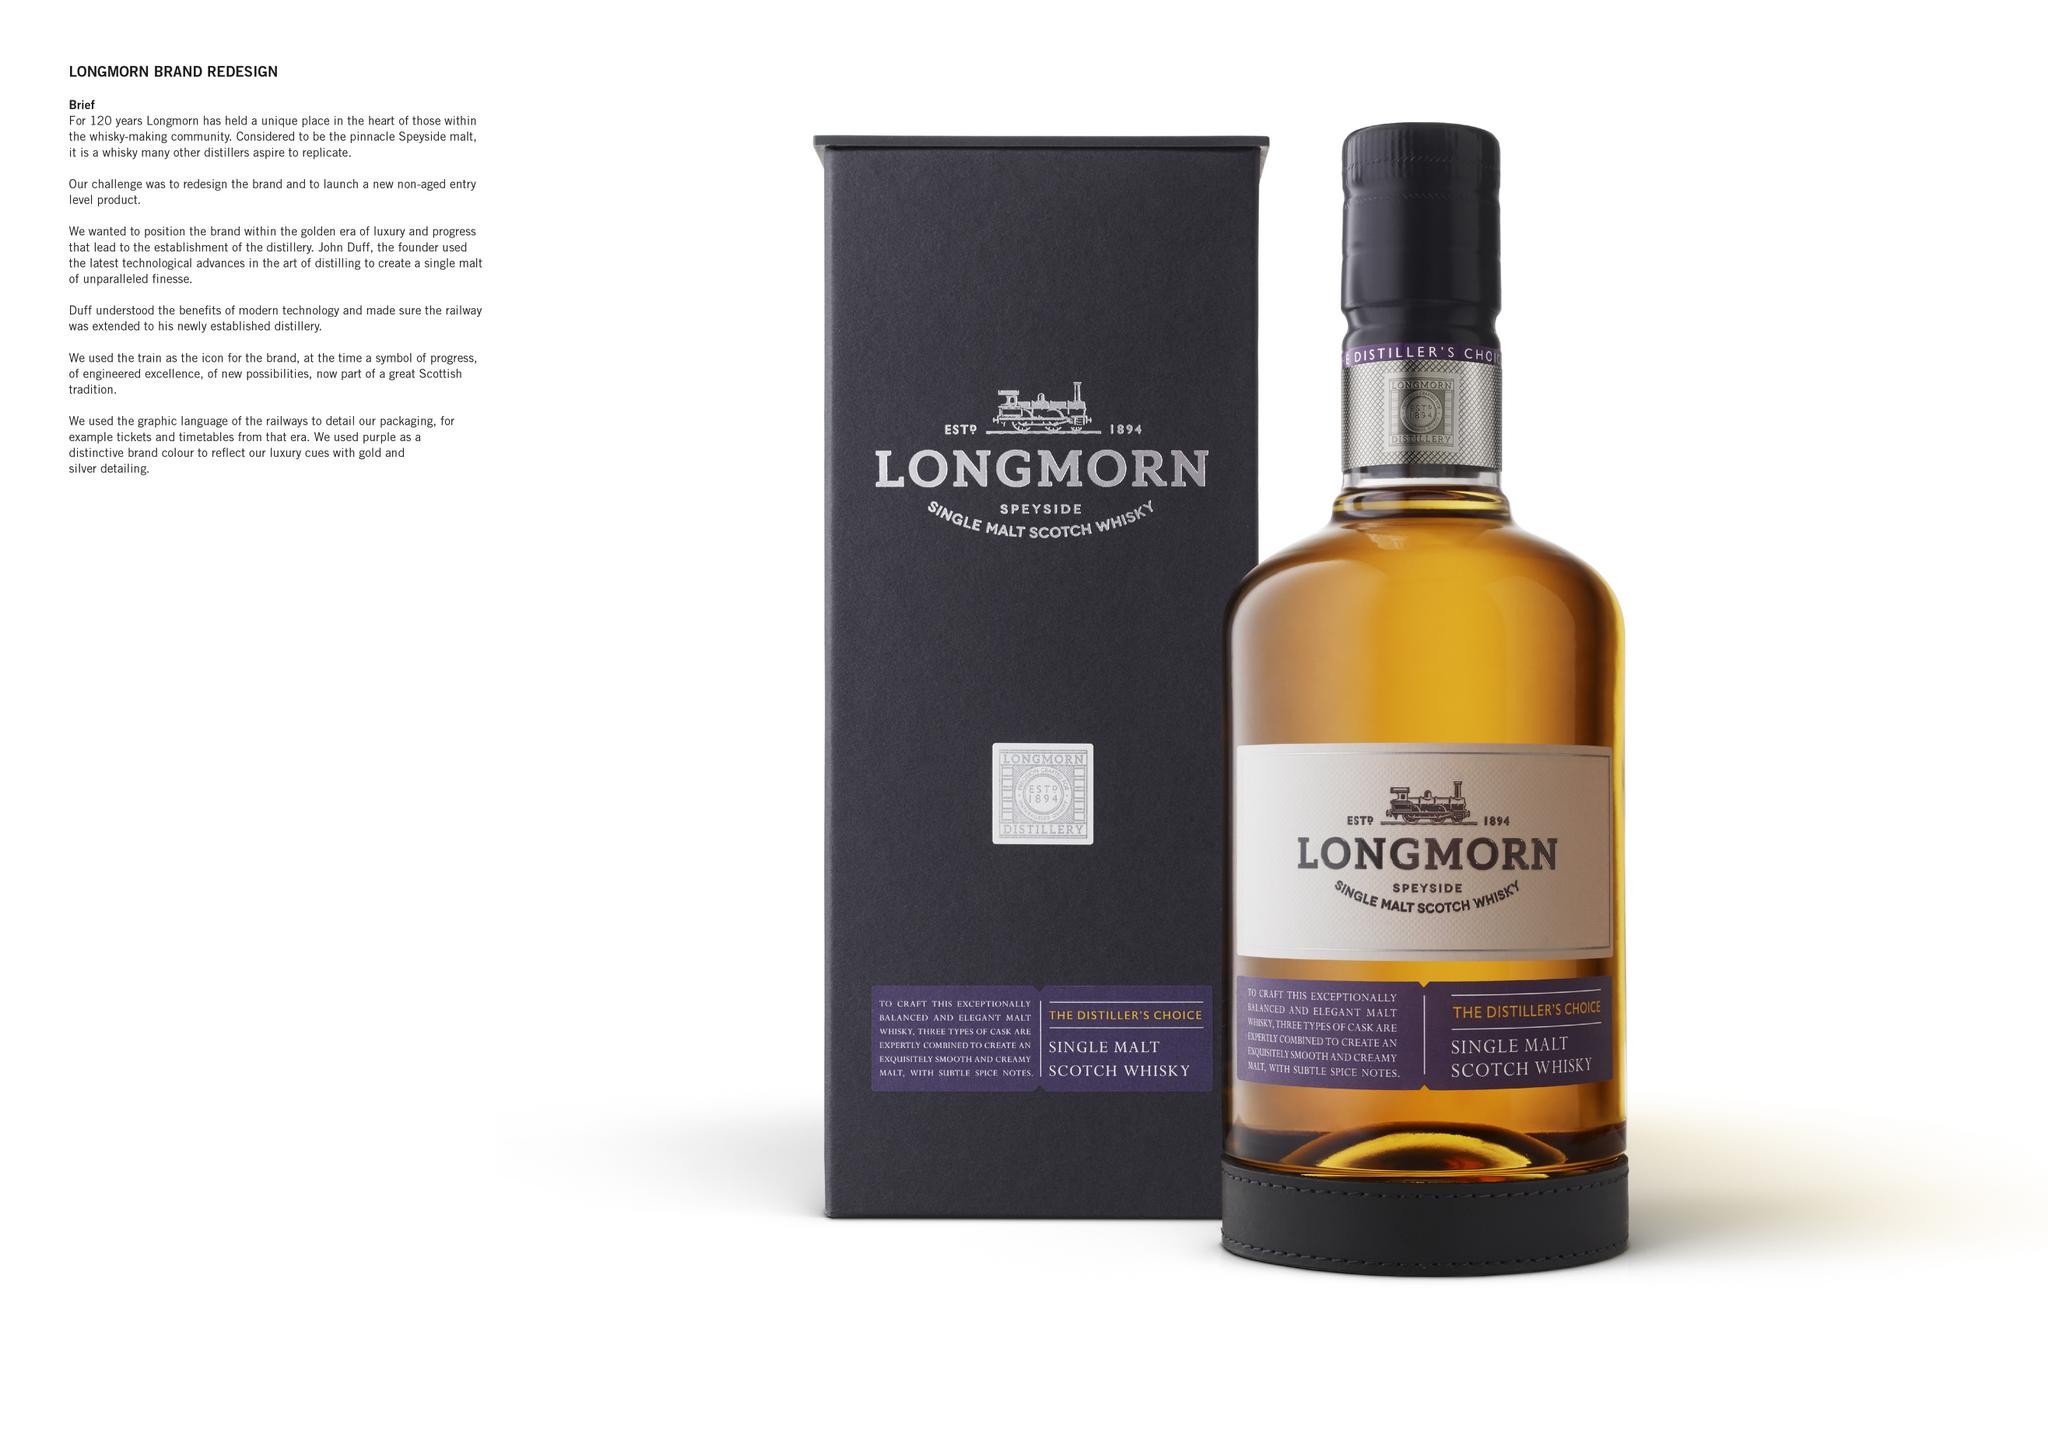 Longmorn Brand Redesign (Distiller’s Choice)